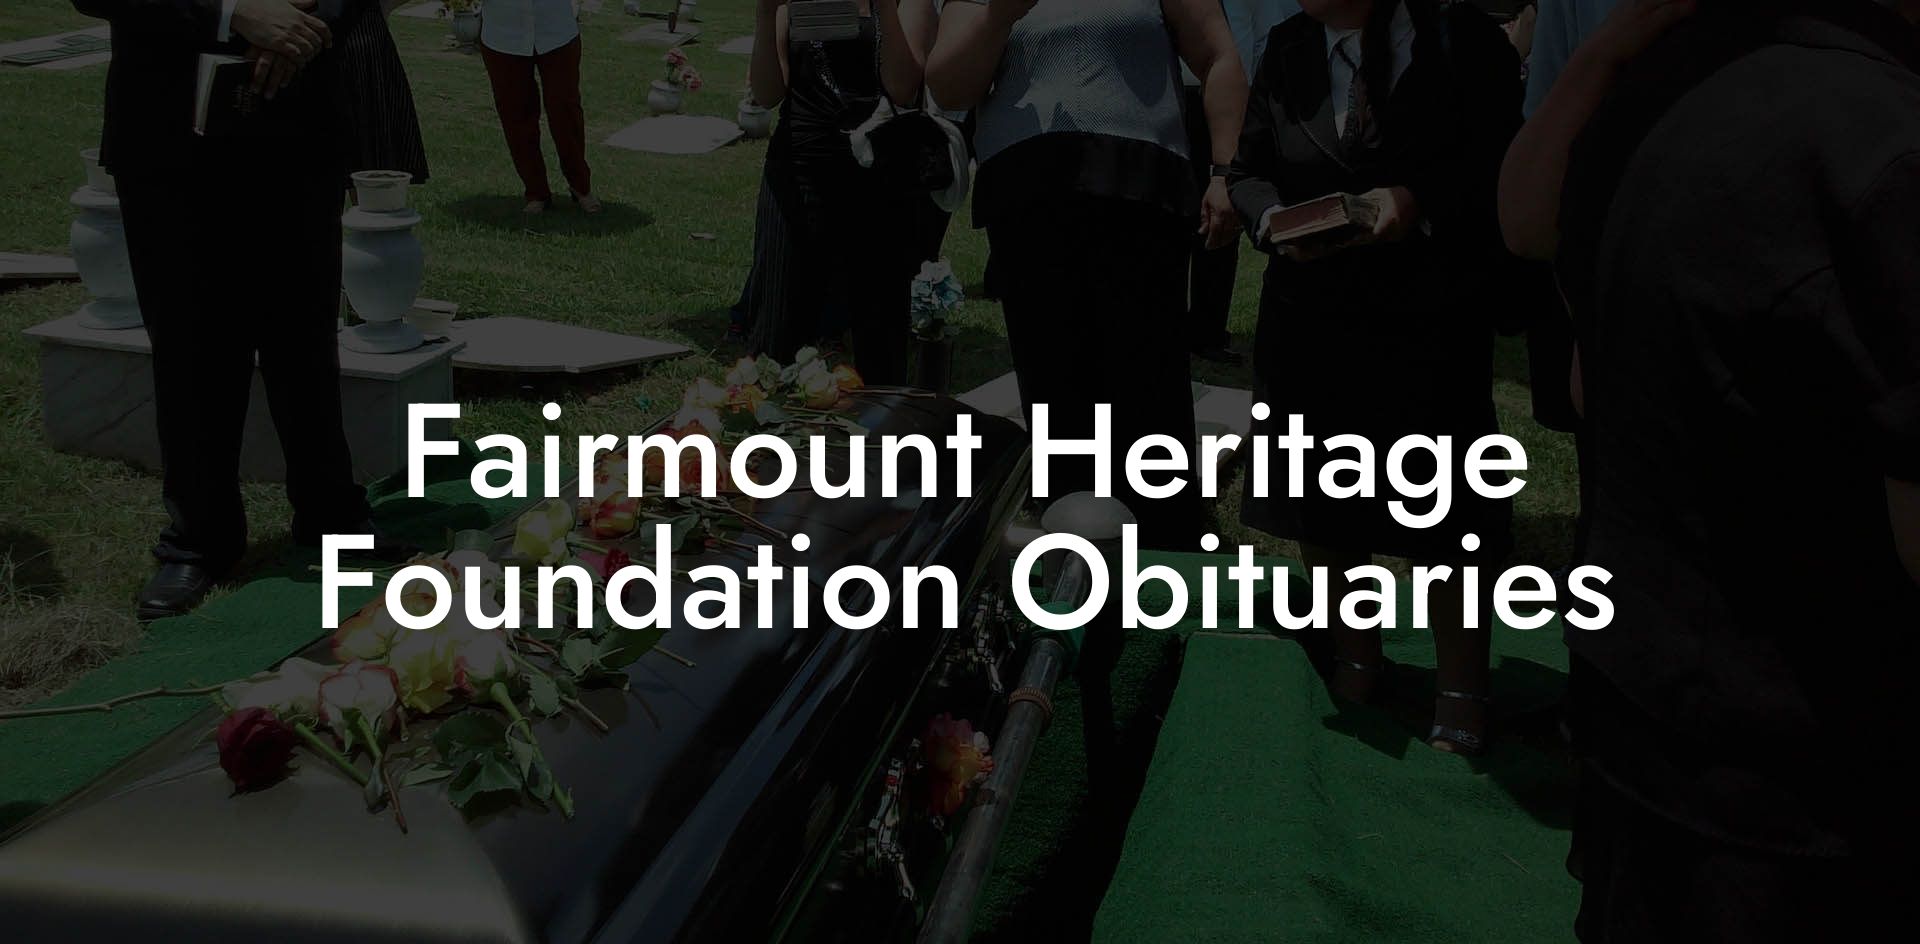 Fairmount Heritage Foundation Obituaries